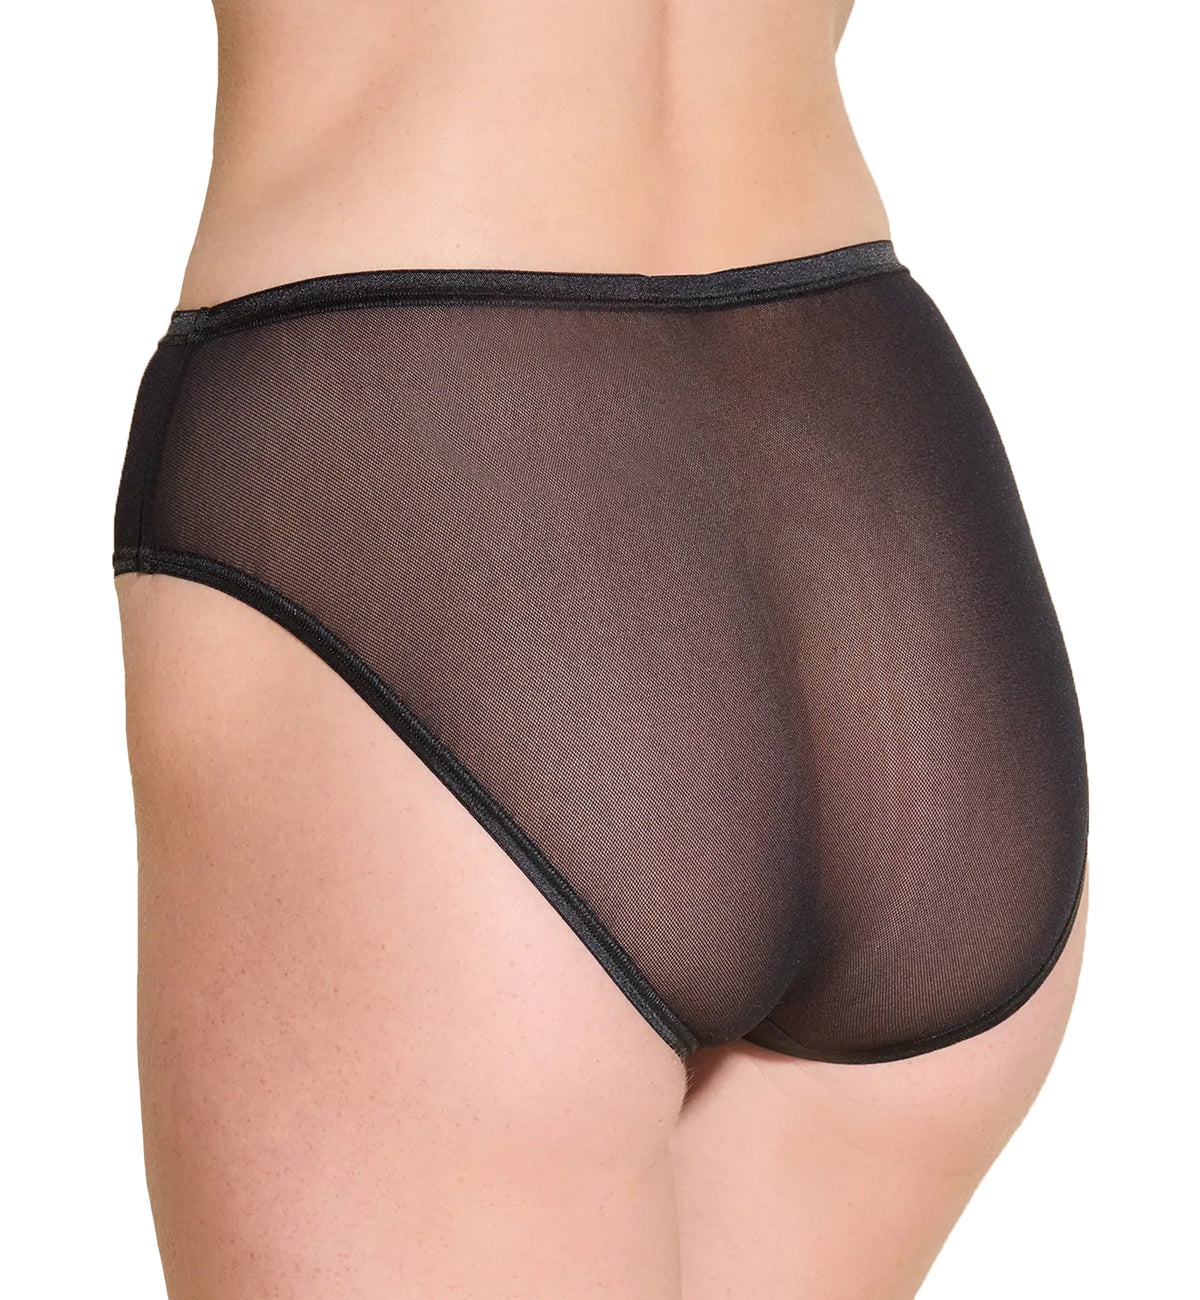 Cosabella Soire Confidence High Waist Brief Panty (SOIRC0562),Small,Black - Black,Small